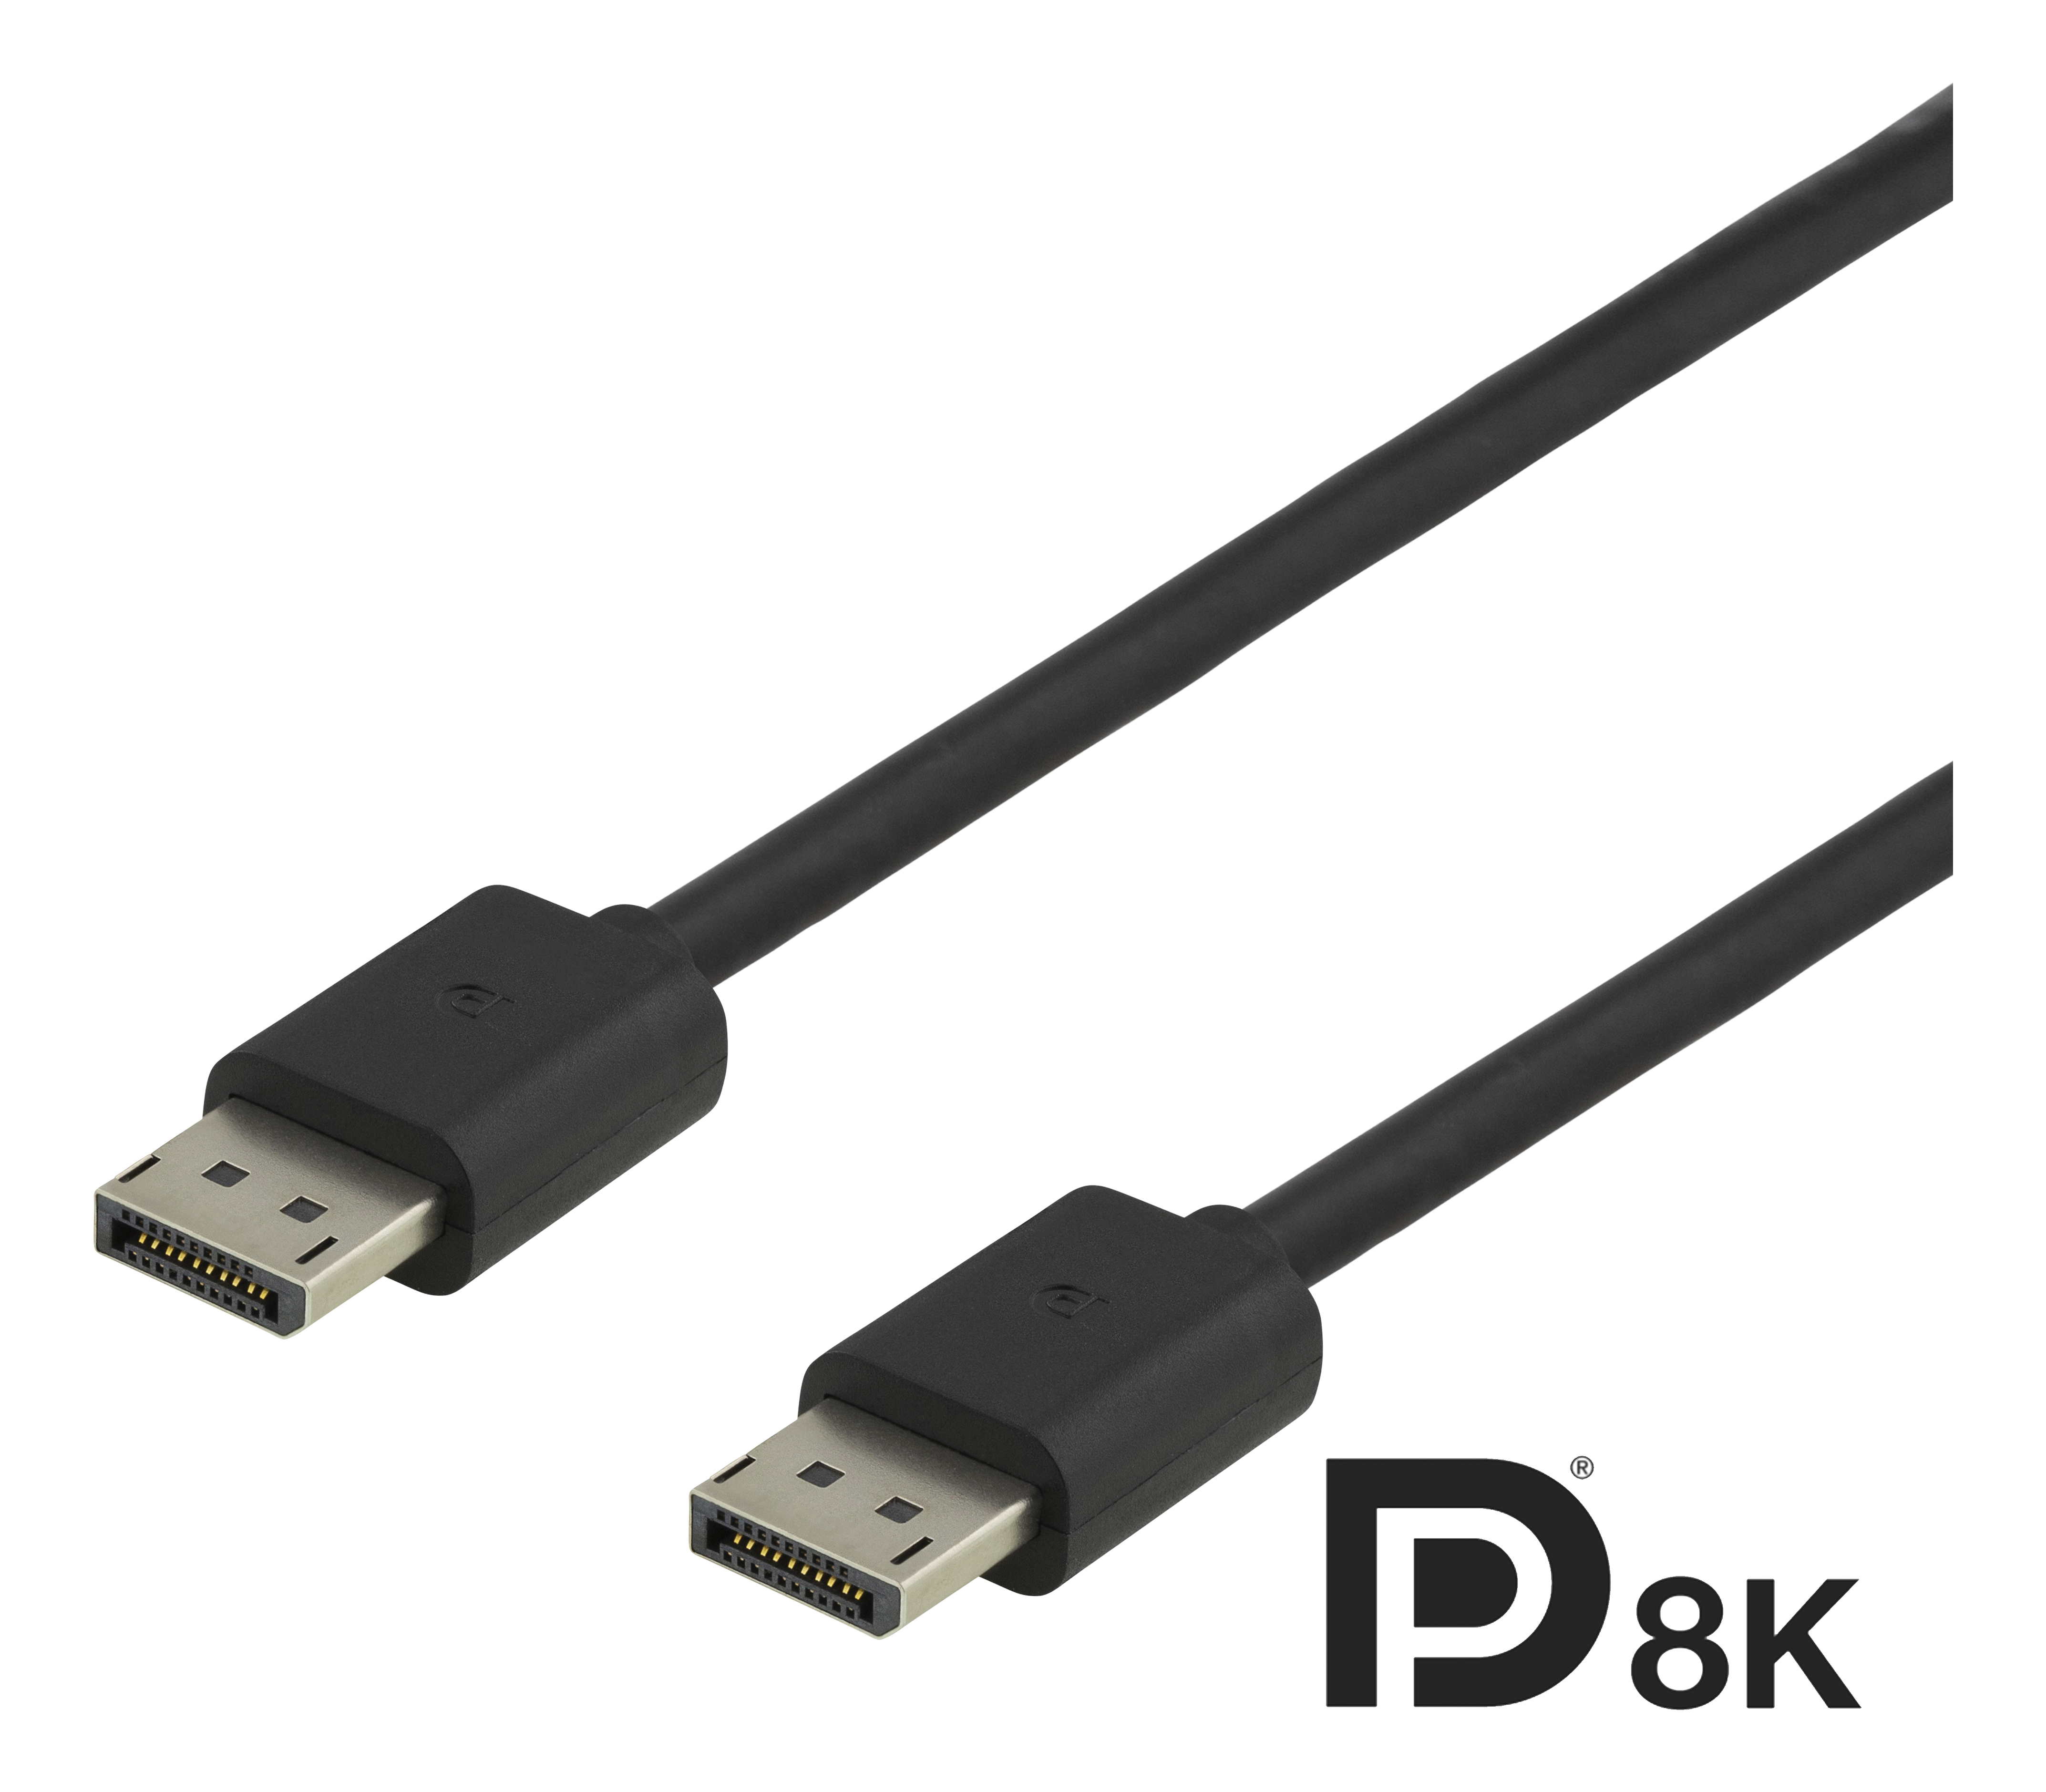 DP kabel, Schwarz DELTACO DisplayPort 1.4